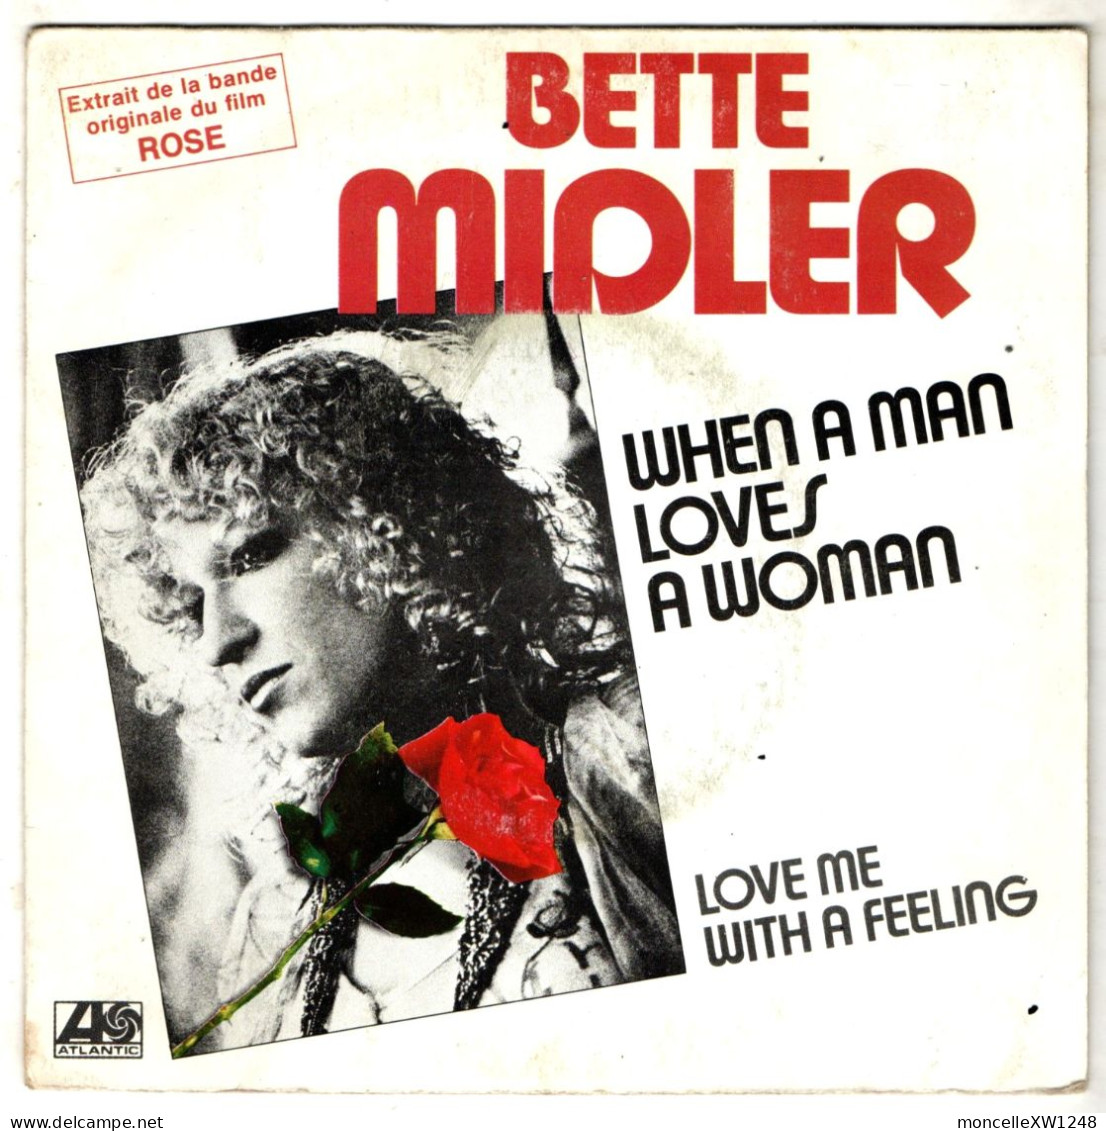 Bette Midler - 45 T SP When A Man Loves A Woman (1979) - Soul - R&B